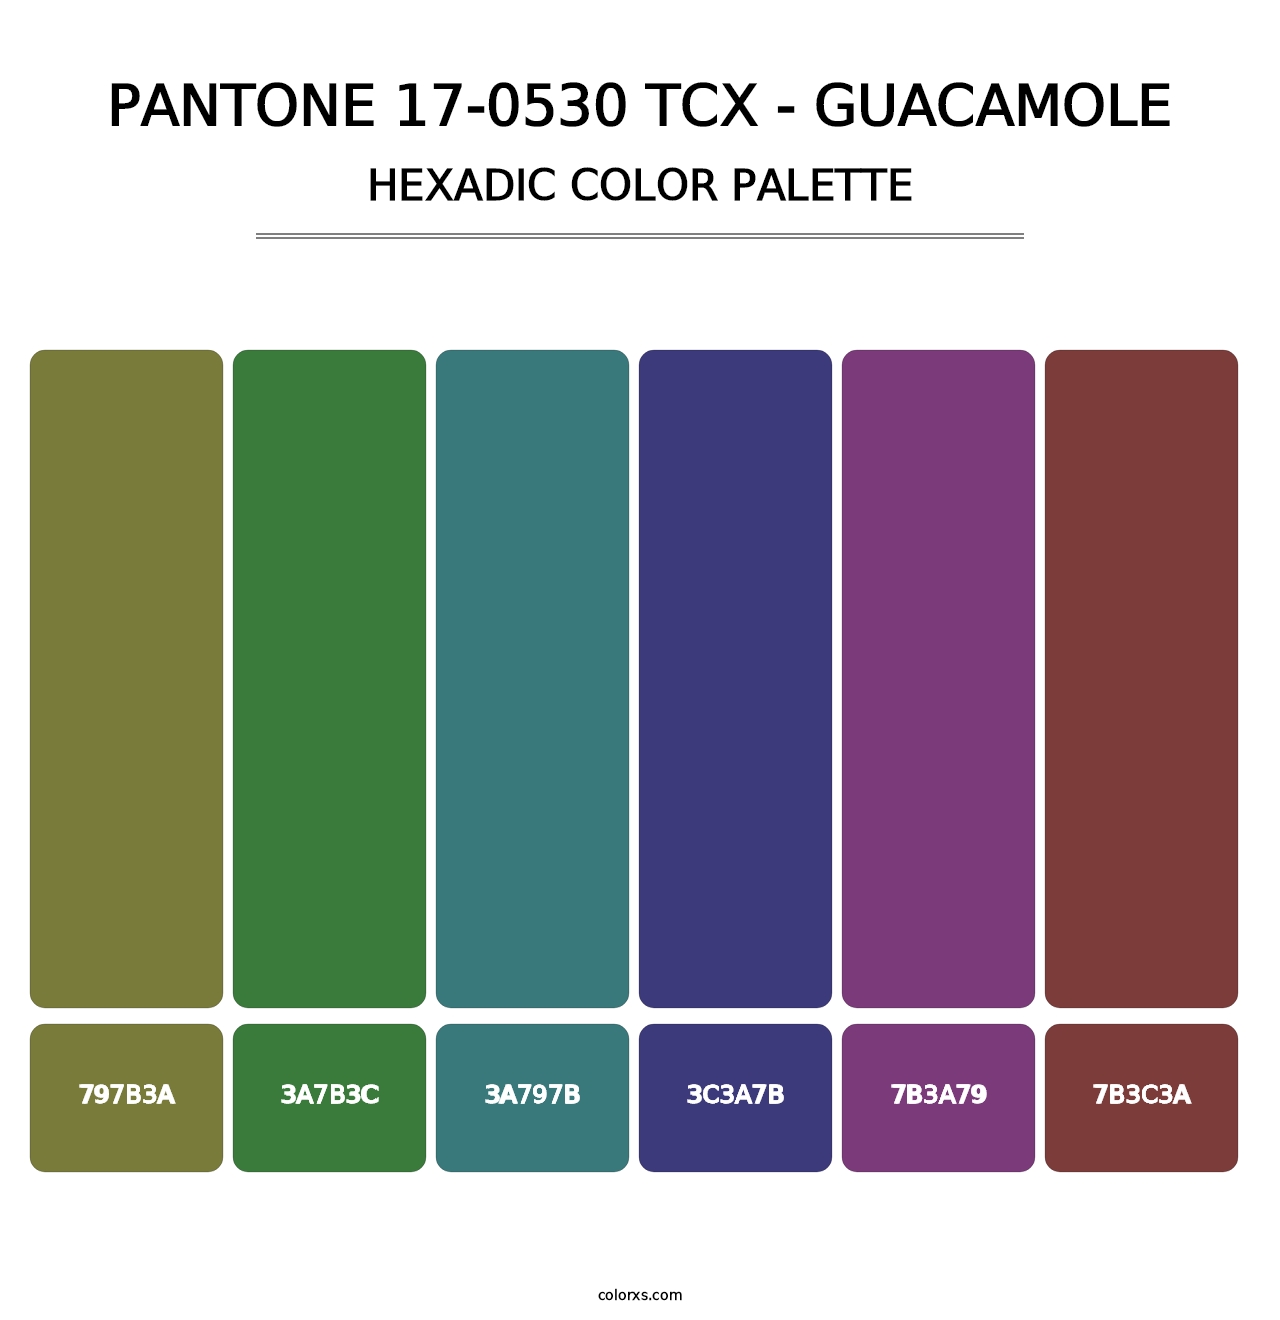 PANTONE 17-0530 TCX - Guacamole - Hexadic Color Palette